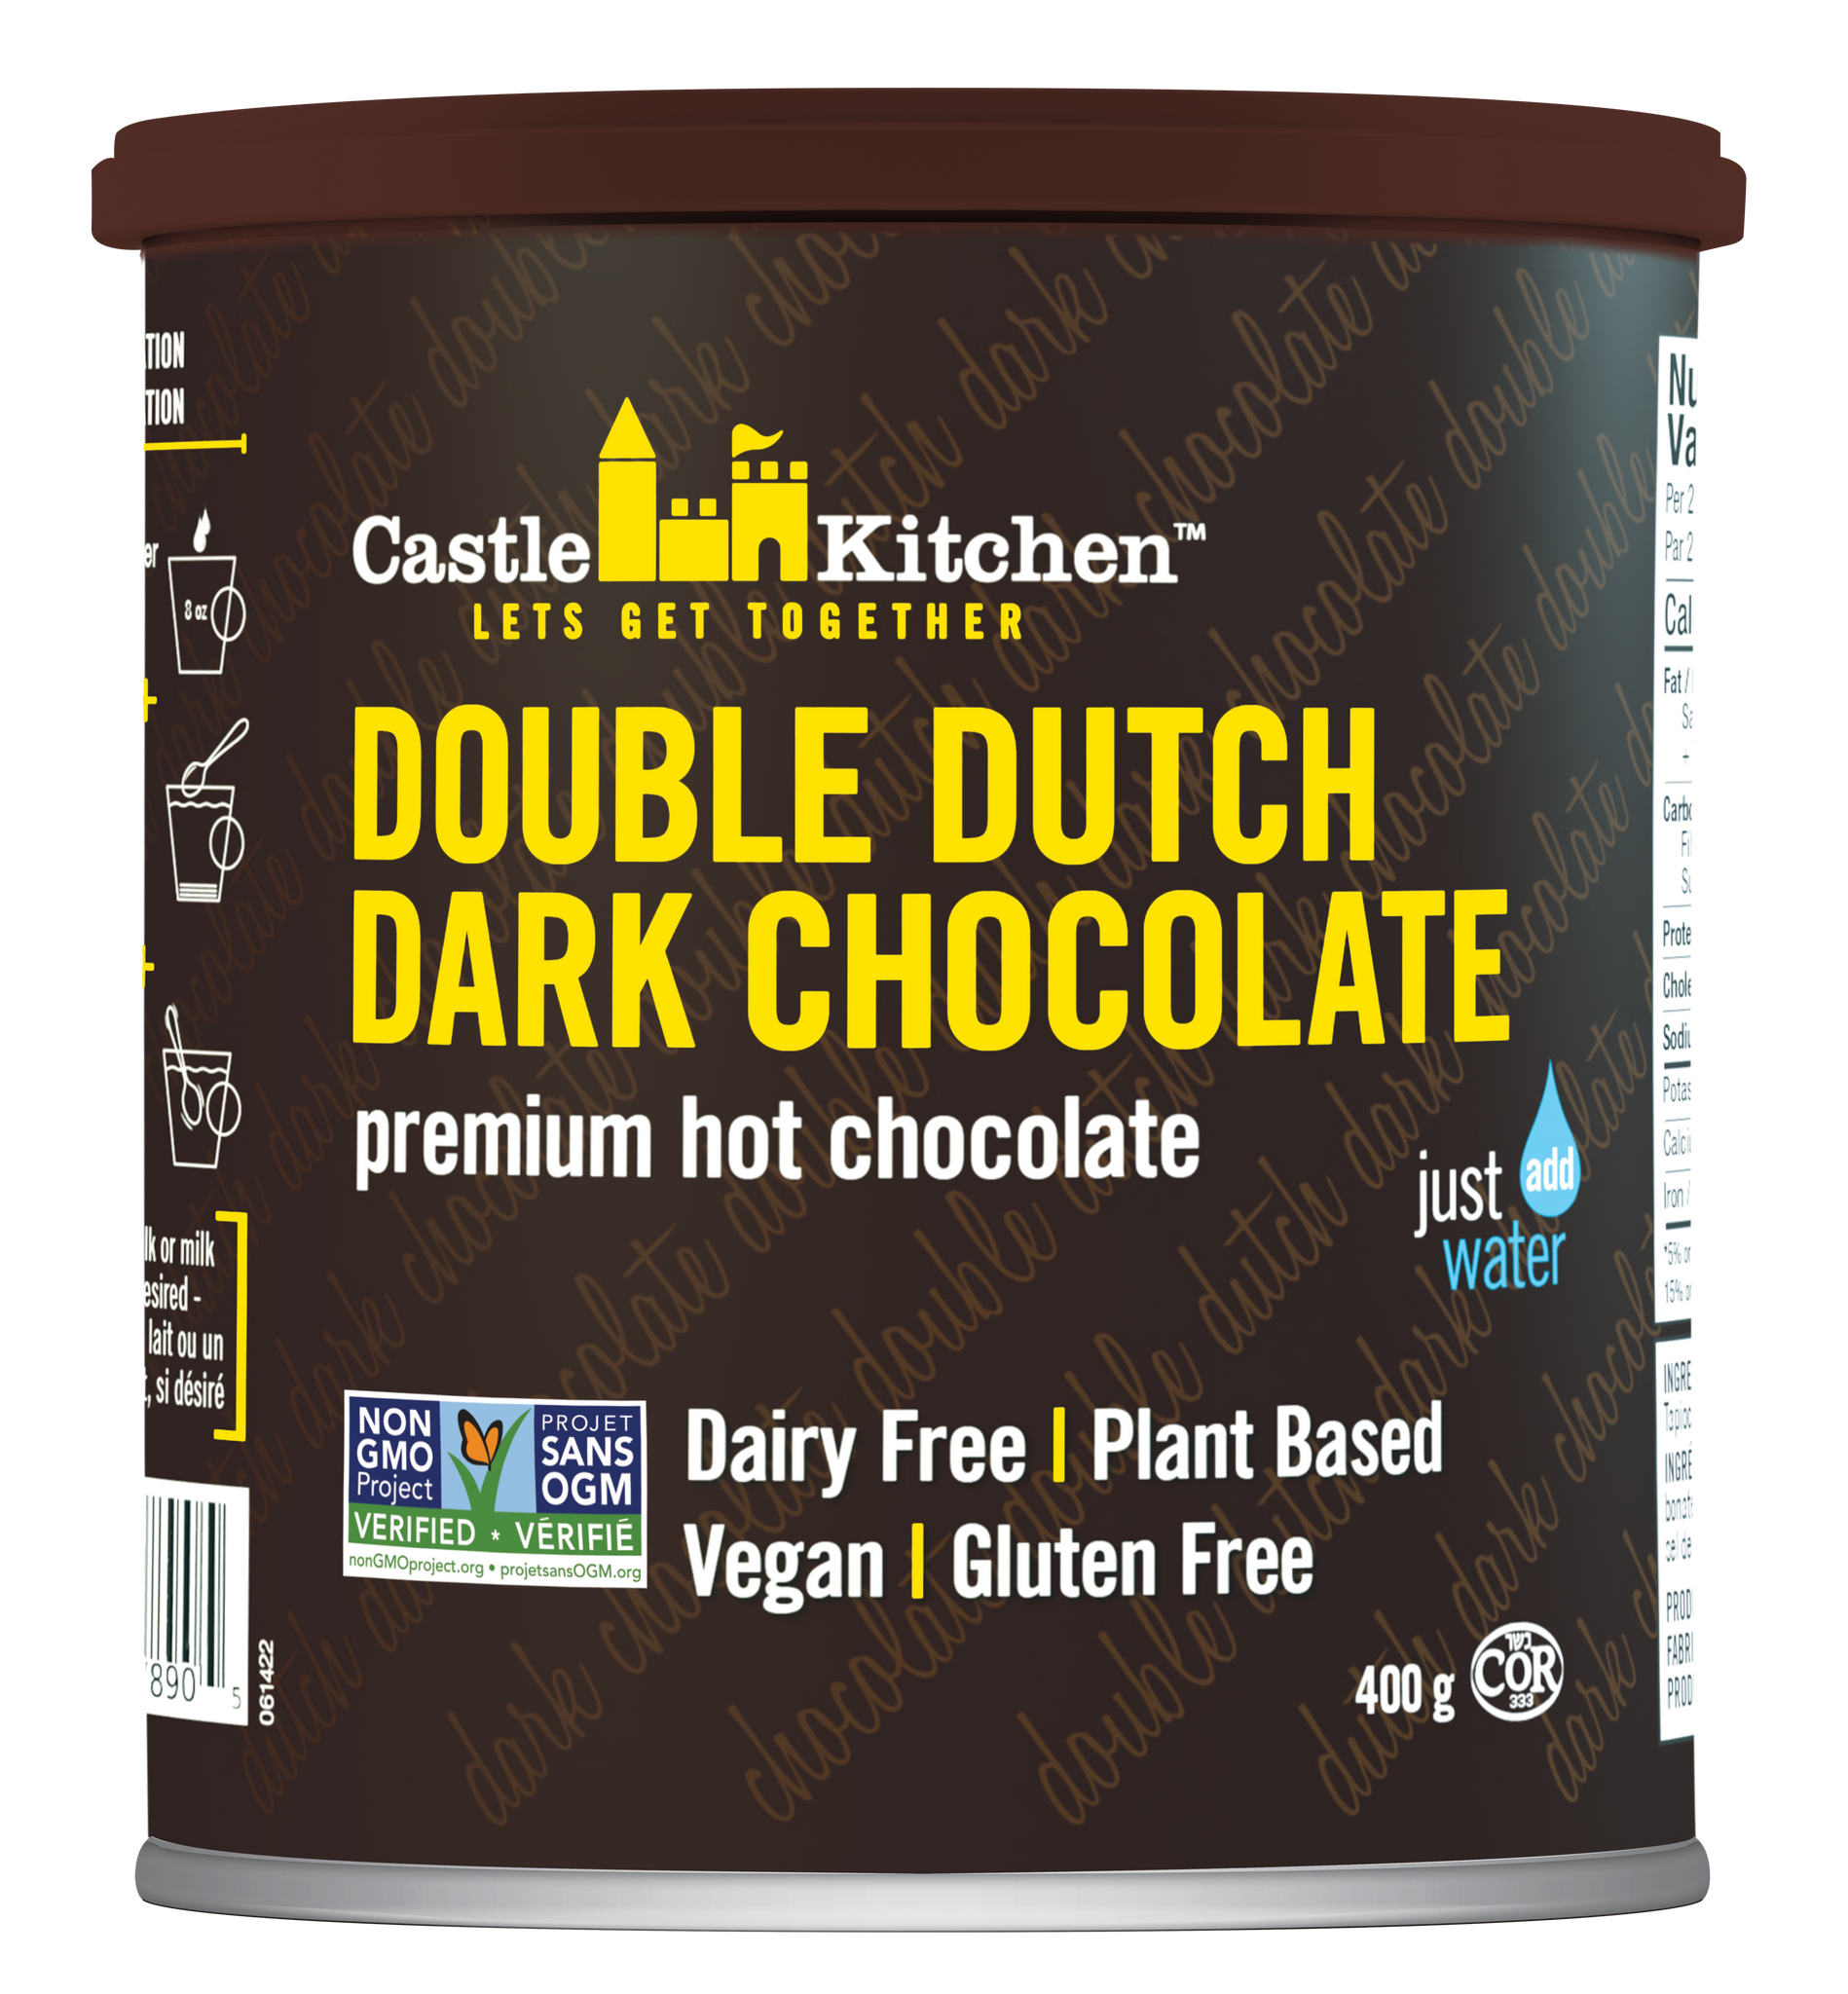 Double Dutch Dark Chocolate